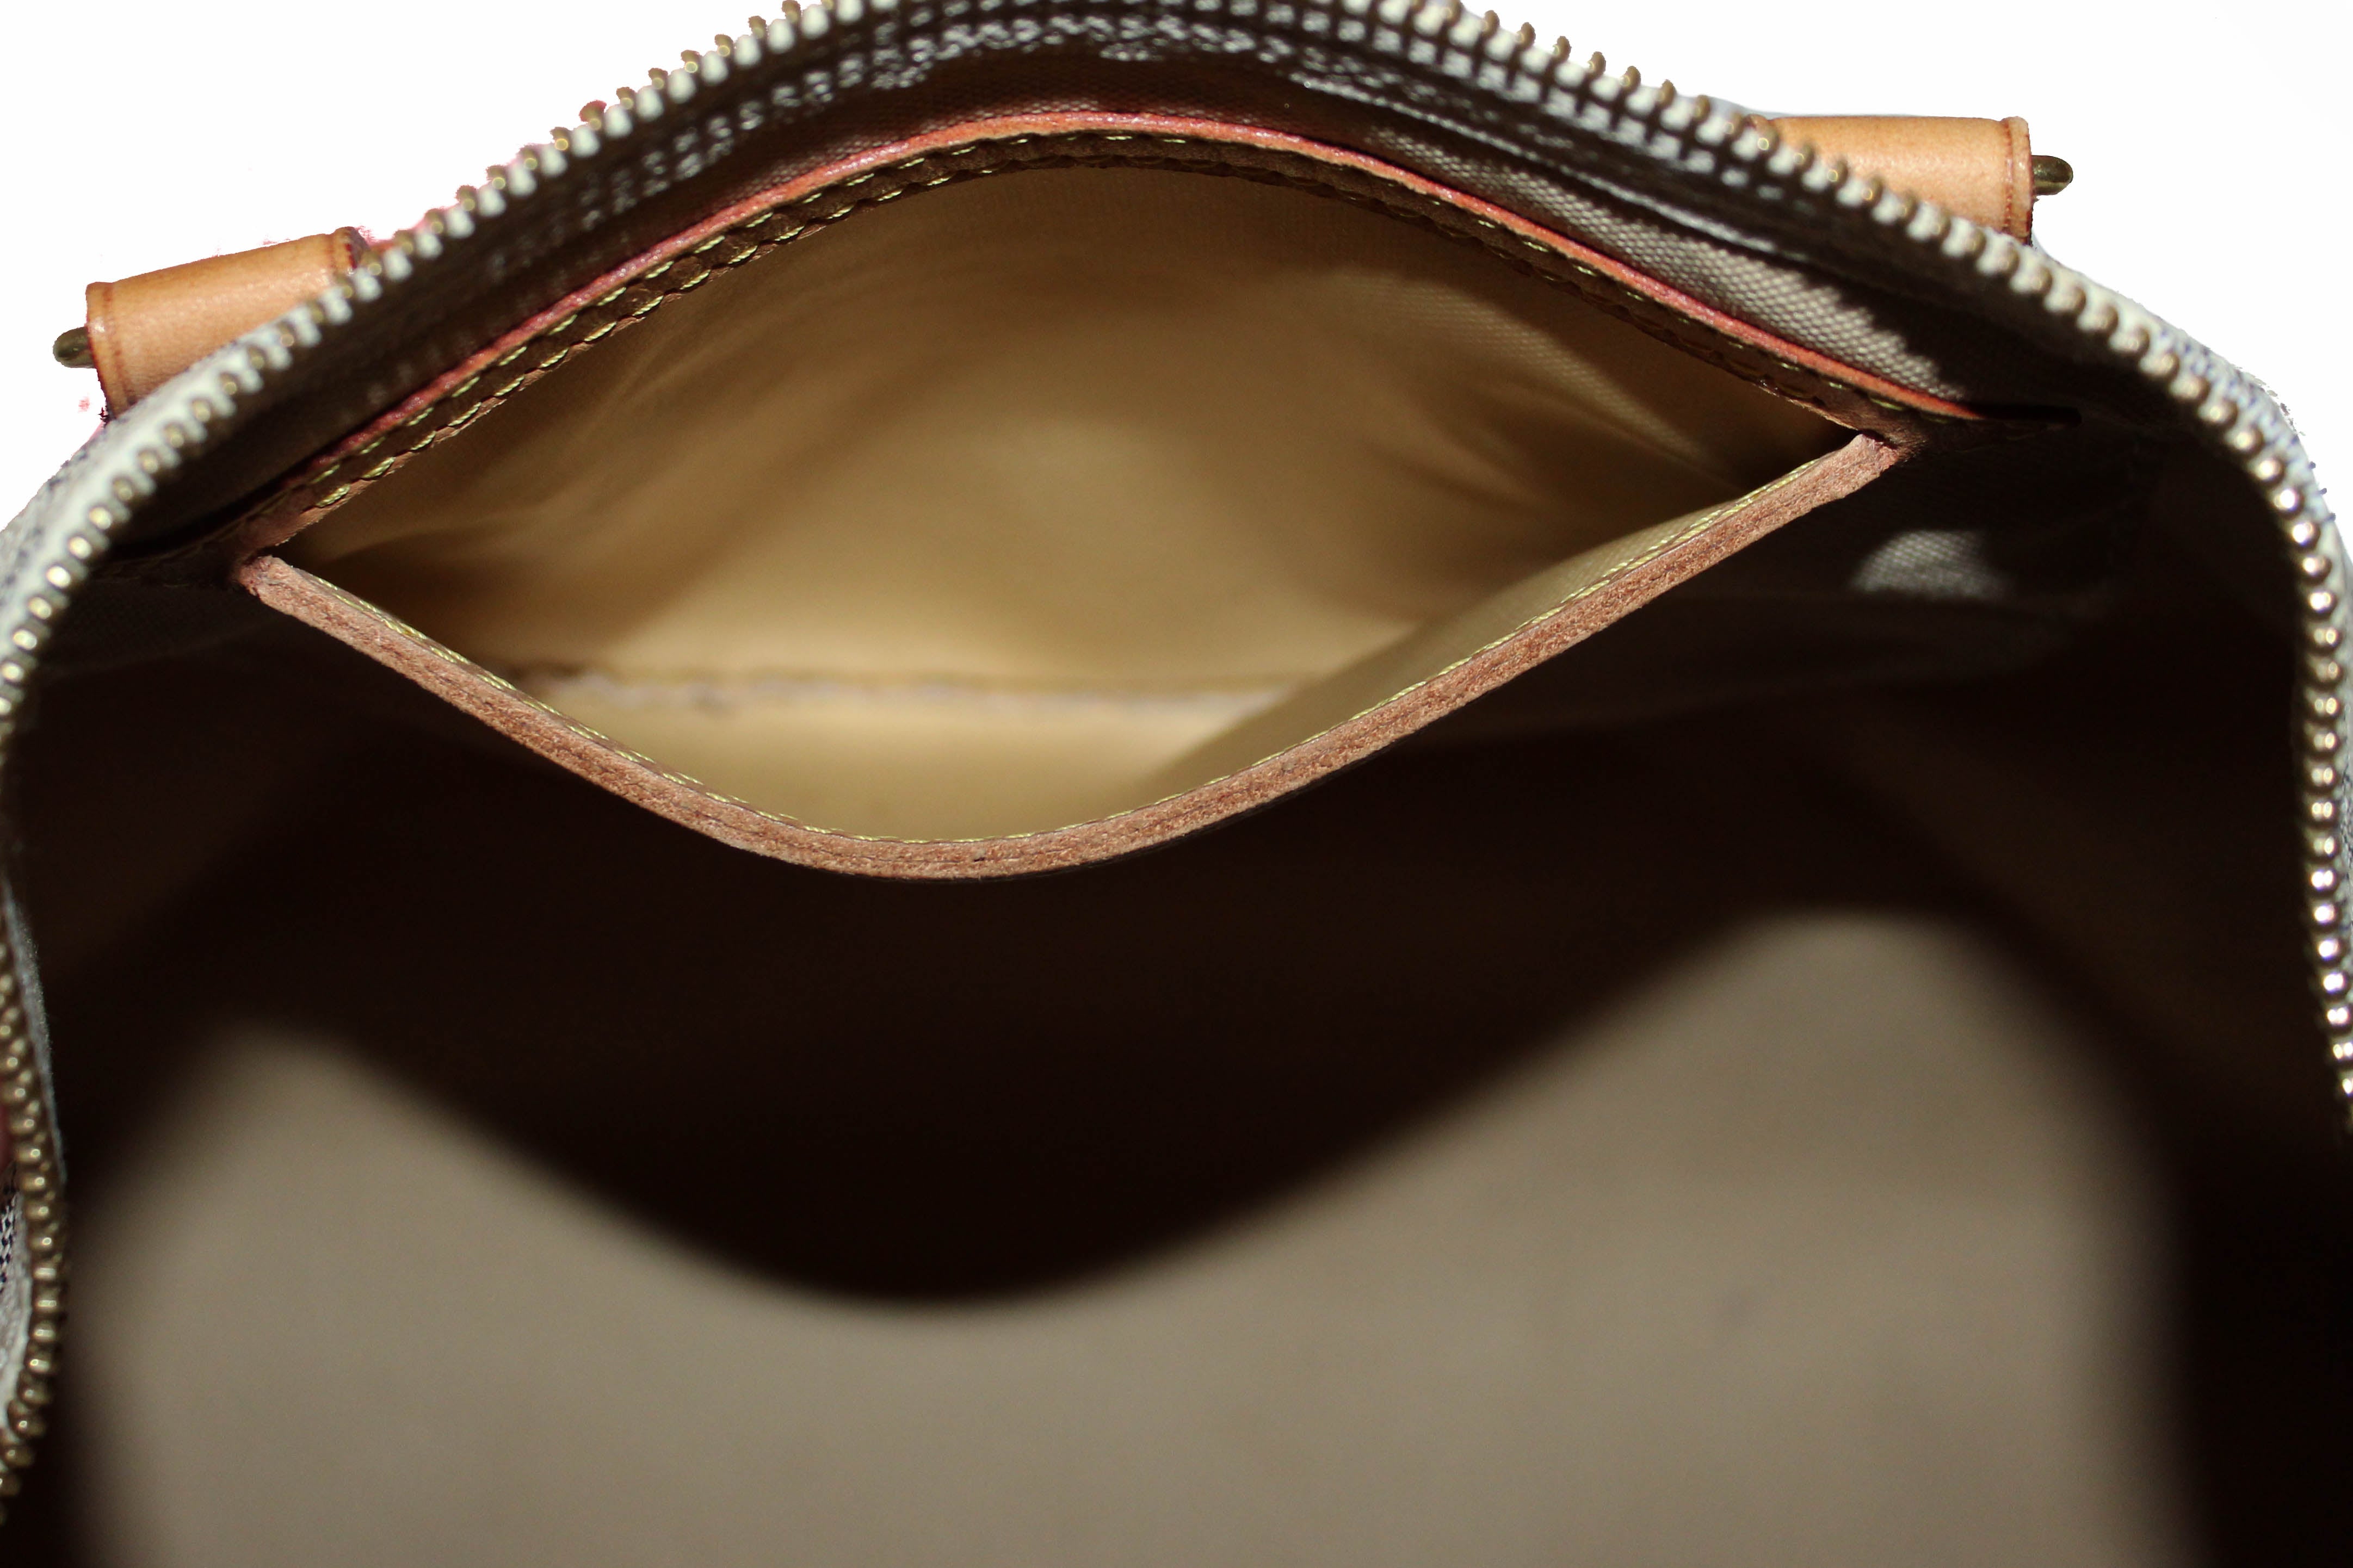 Authentic Louis Vuitton Damier Azur Speedy 35 Handbag